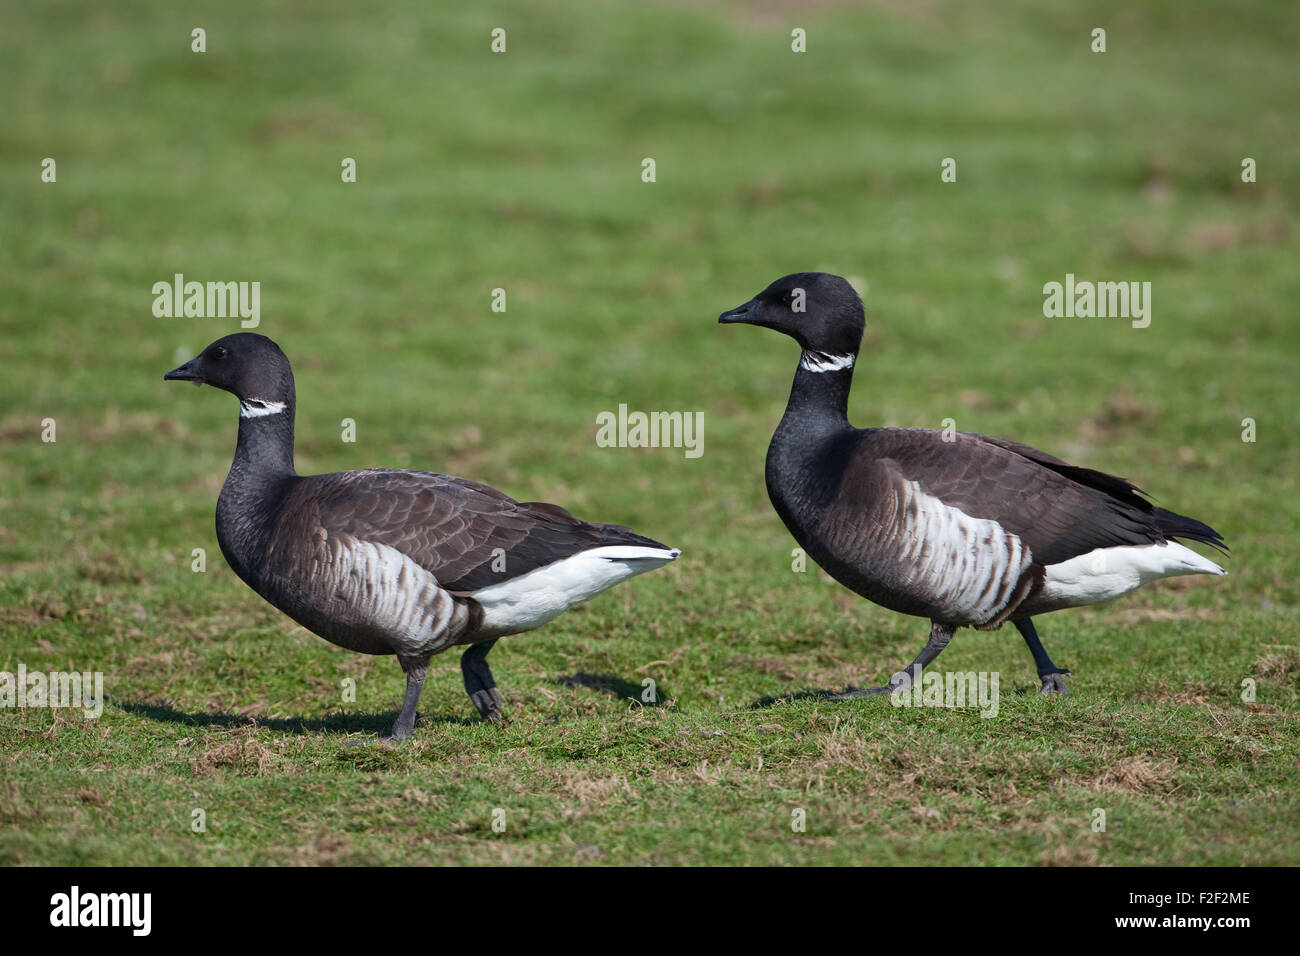 Black Brant or Pacific Brent Geese (Branta bernicla orientalis). Pair, goose or female left. Stock Photo